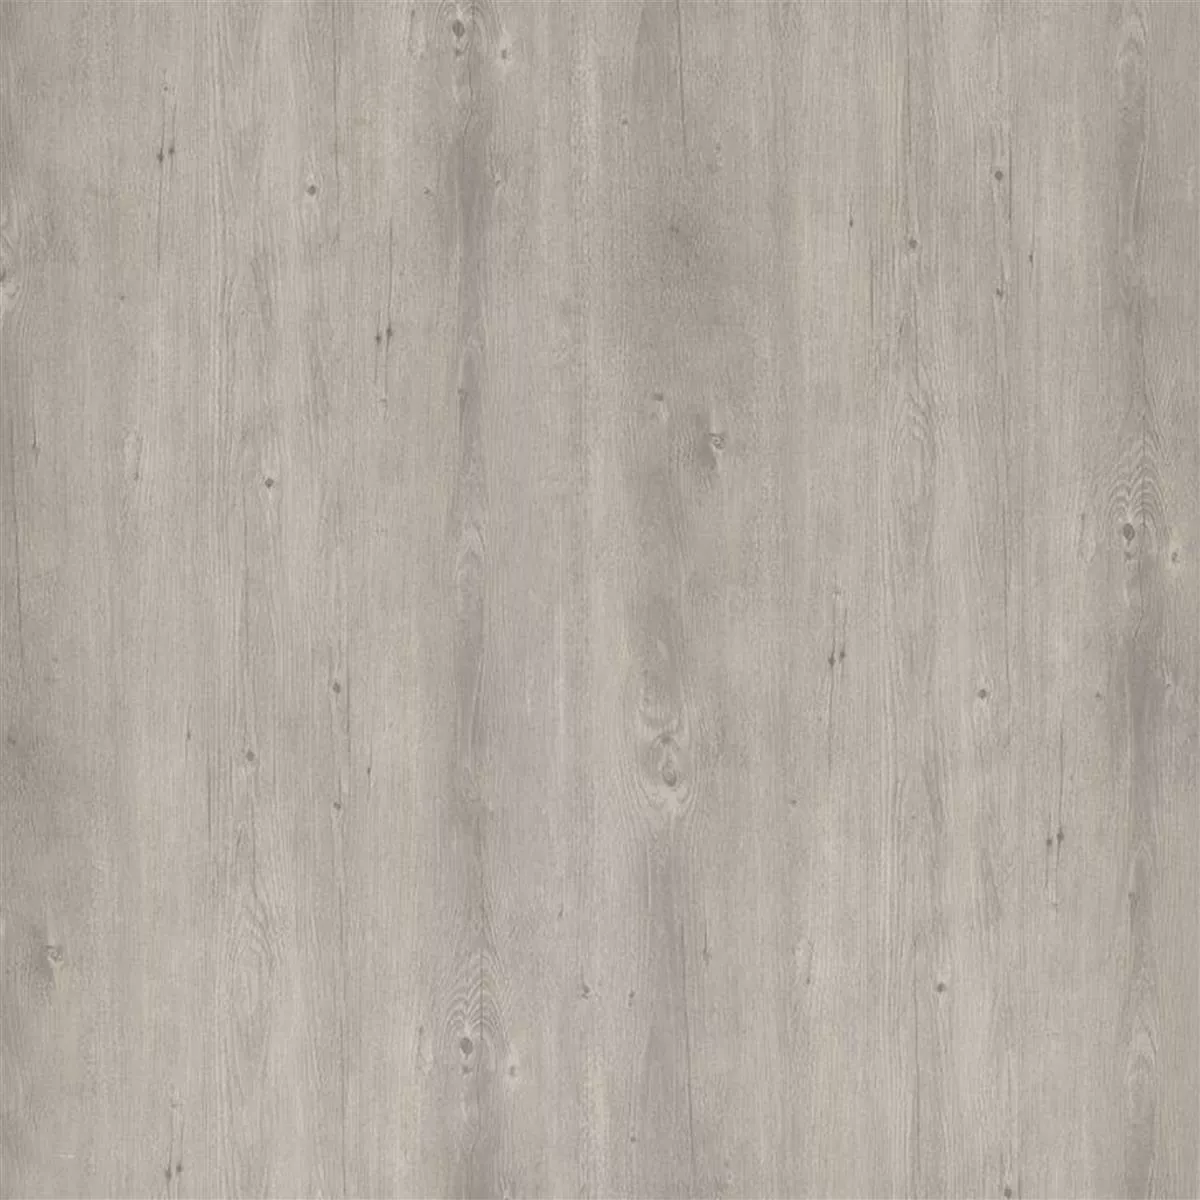 Piastrelle In Vinile Sistema A Clic Greywood Grigio 17,2x121cm